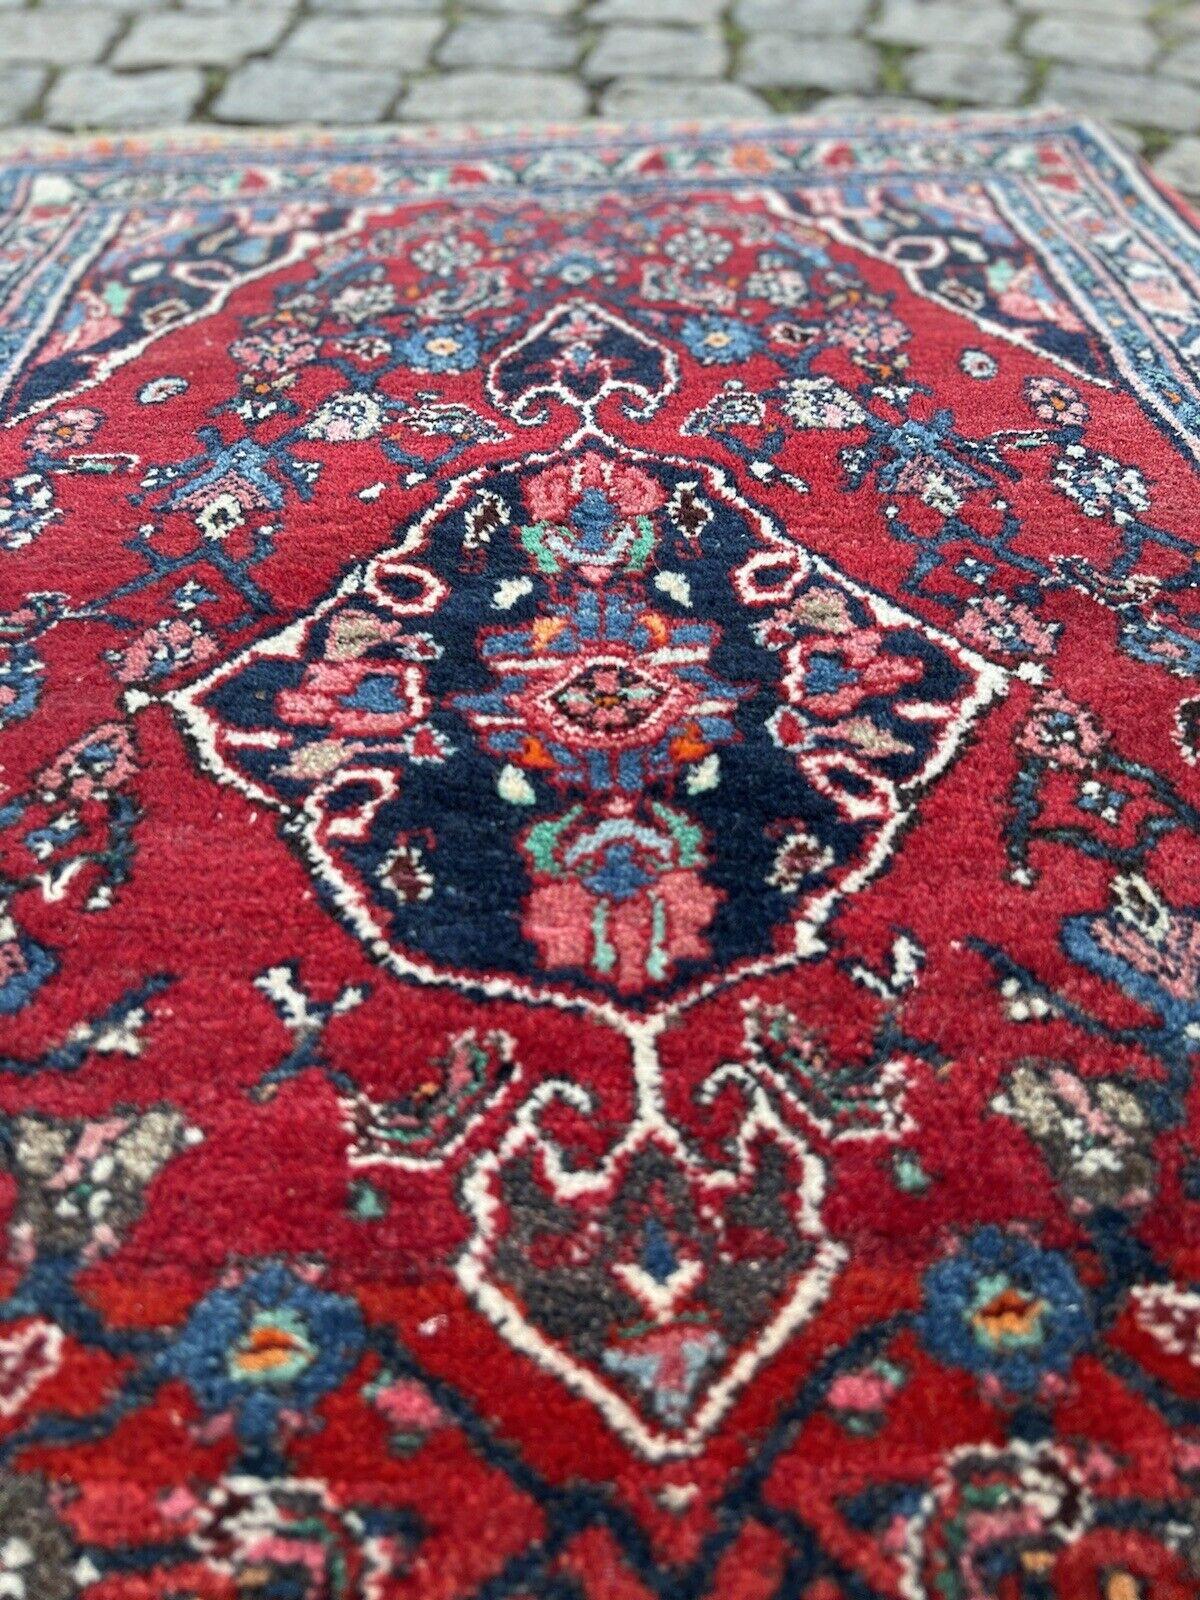 Late 20th Century Handmade Vintage Persian Style Bidjar Rug 2.2' x 3.7', 1970s - 1S61 For Sale